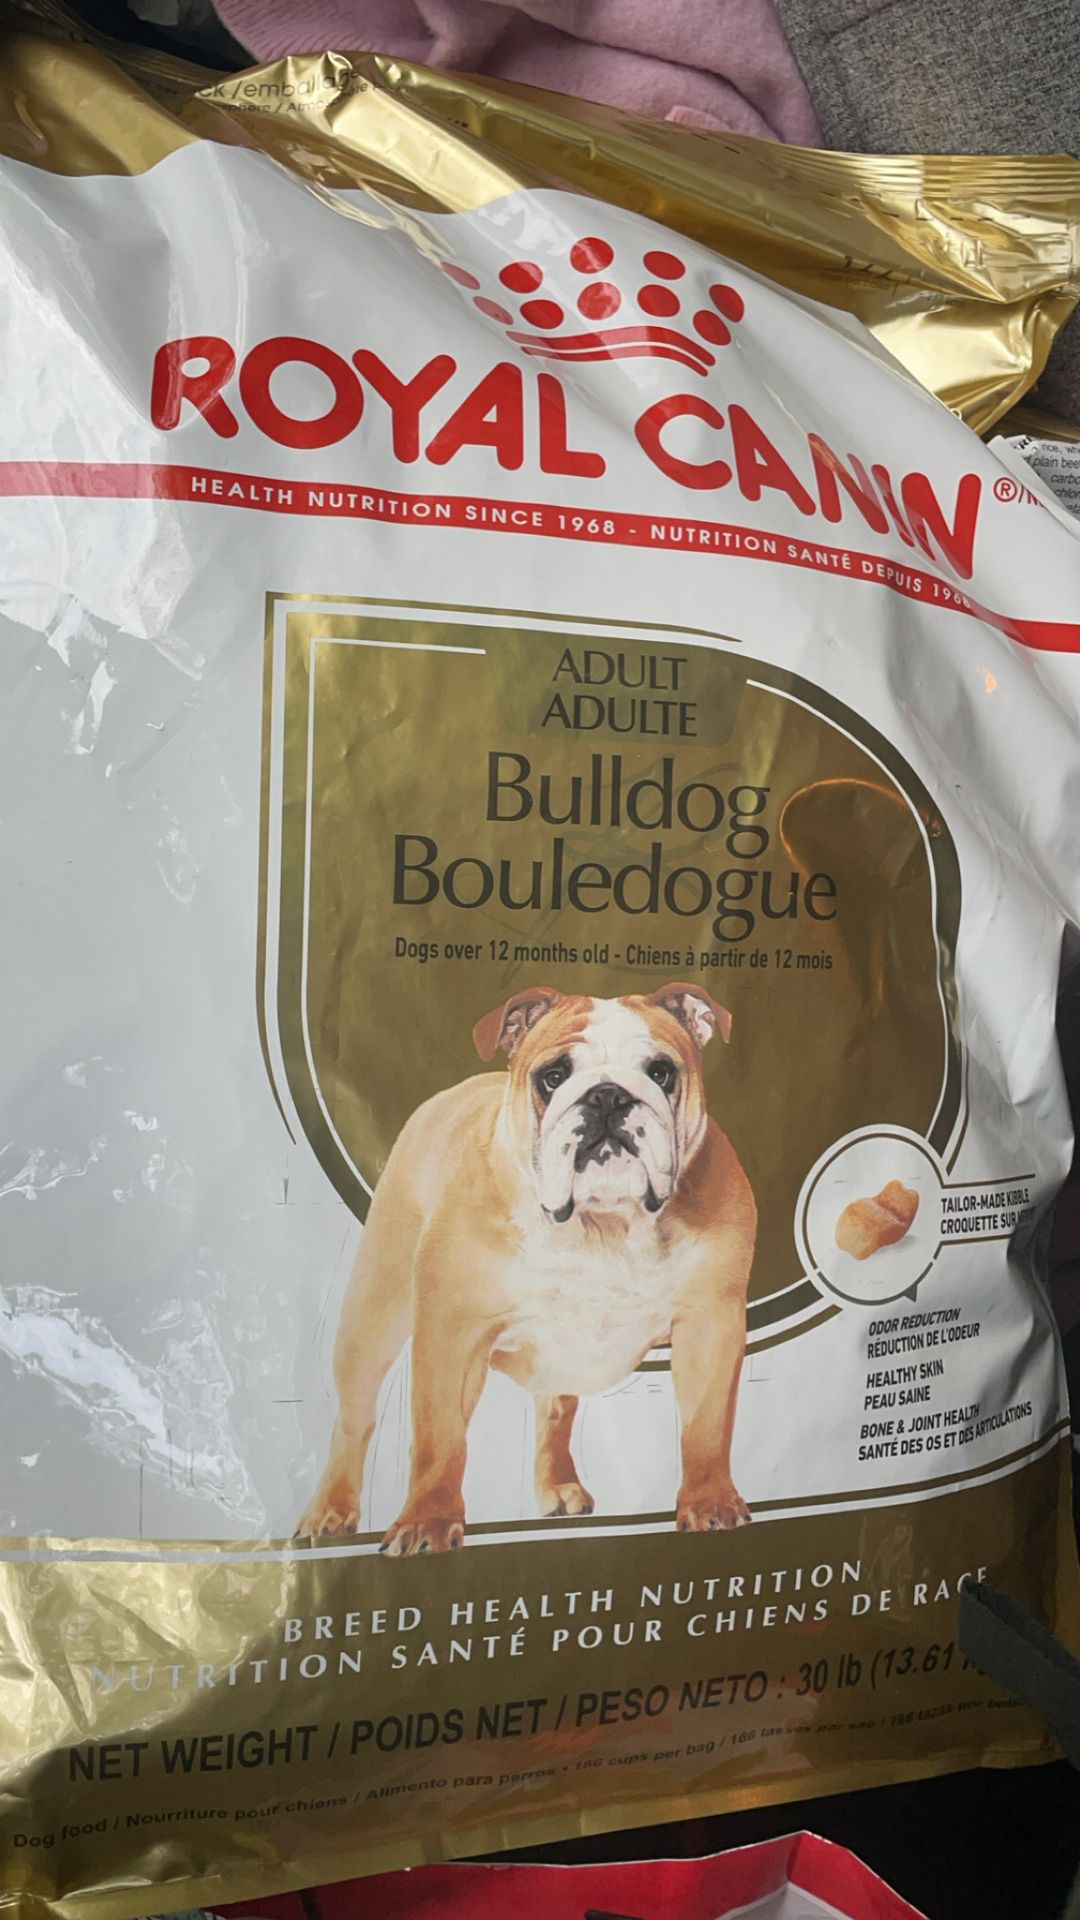 Royal Cannin dog Food